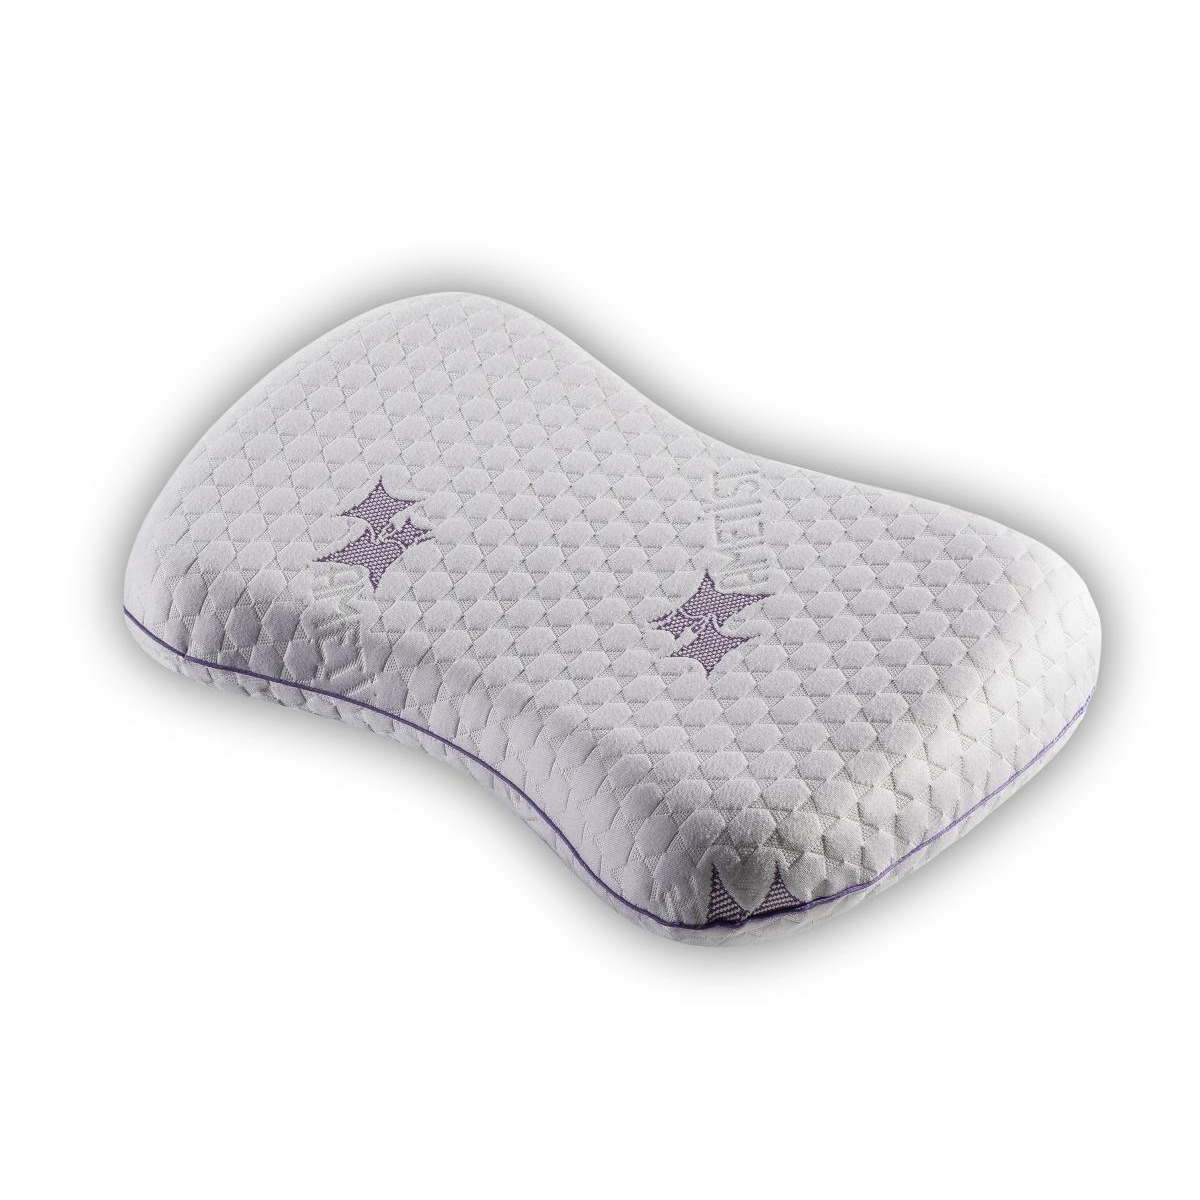 Decorotika AMPLW02 24 x16 x 6 in. Dynamic Sleep Miracle Visco Memory Foam Neck Support Pillow